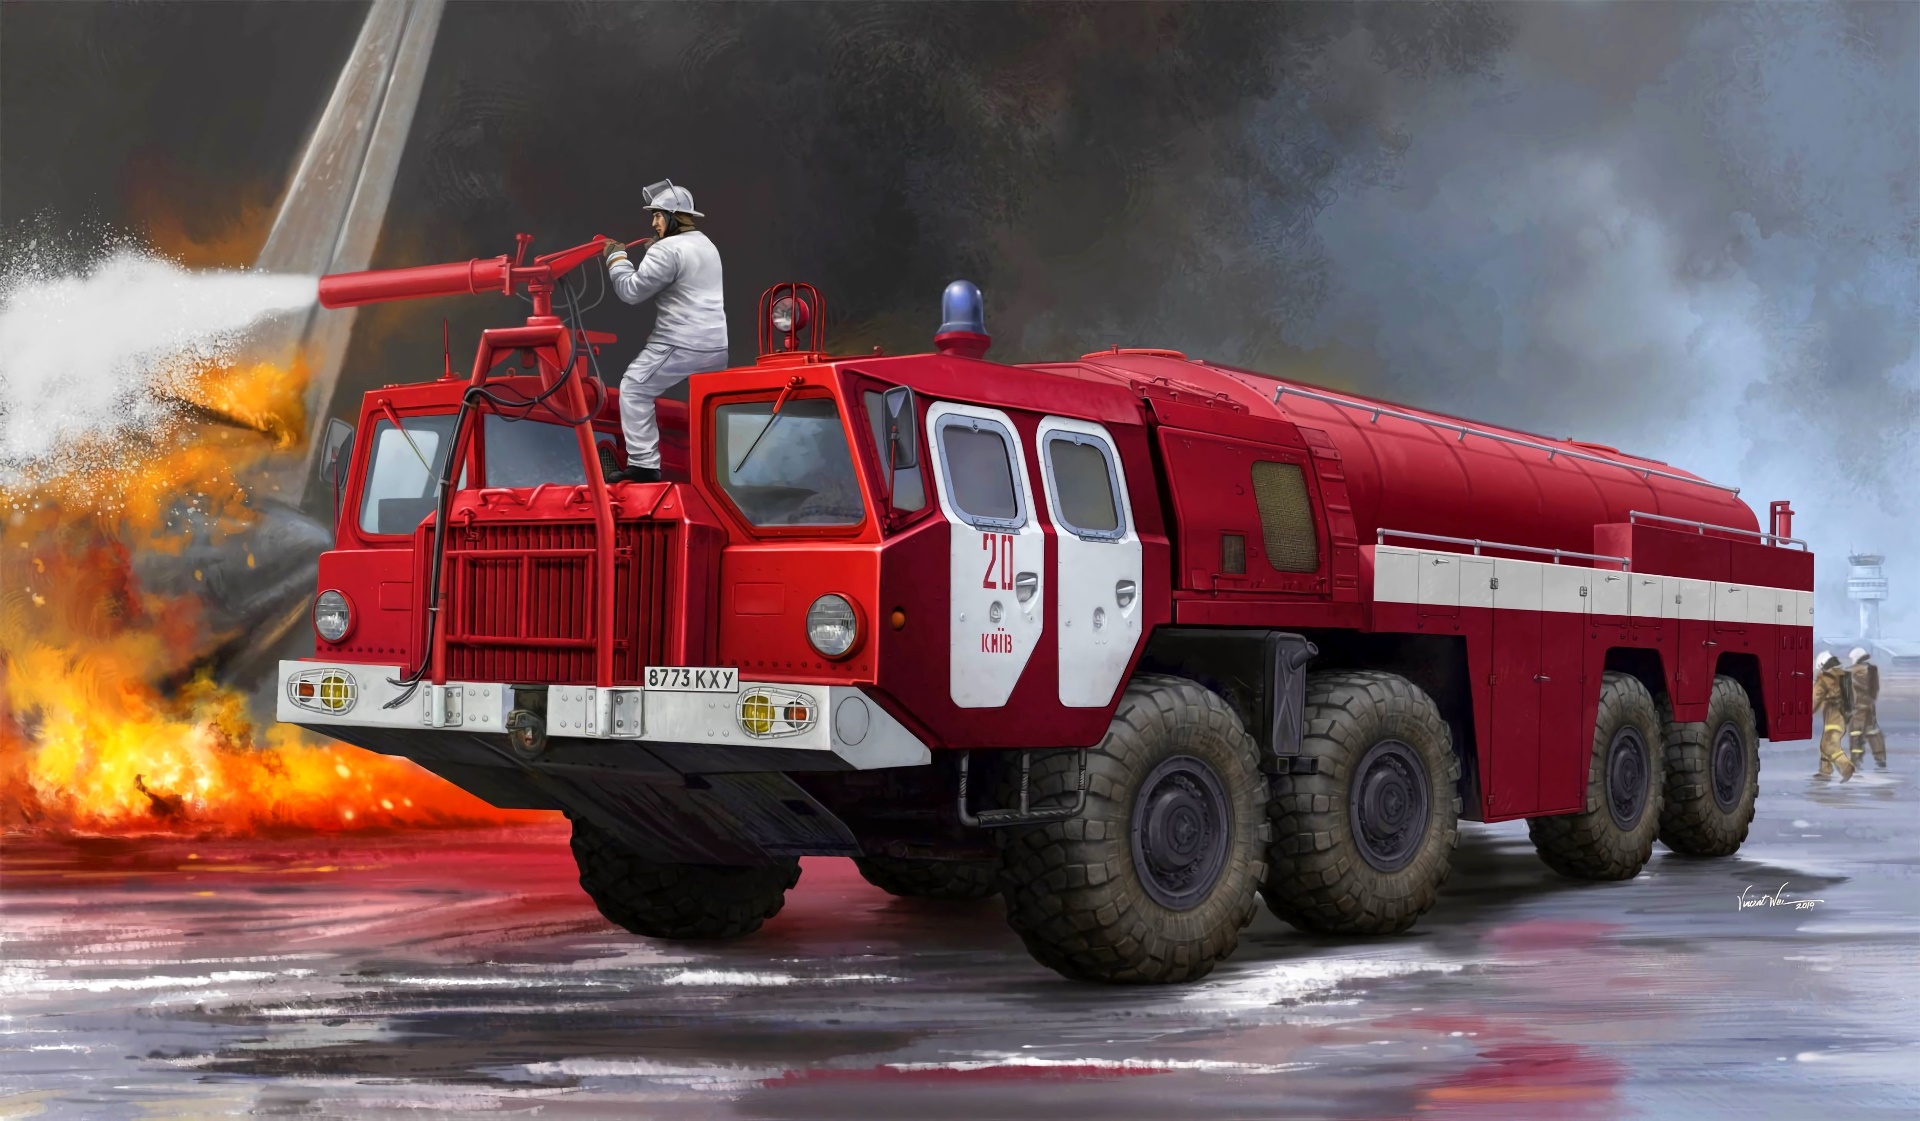 General 1920x1121 vehicle artwork firefighers